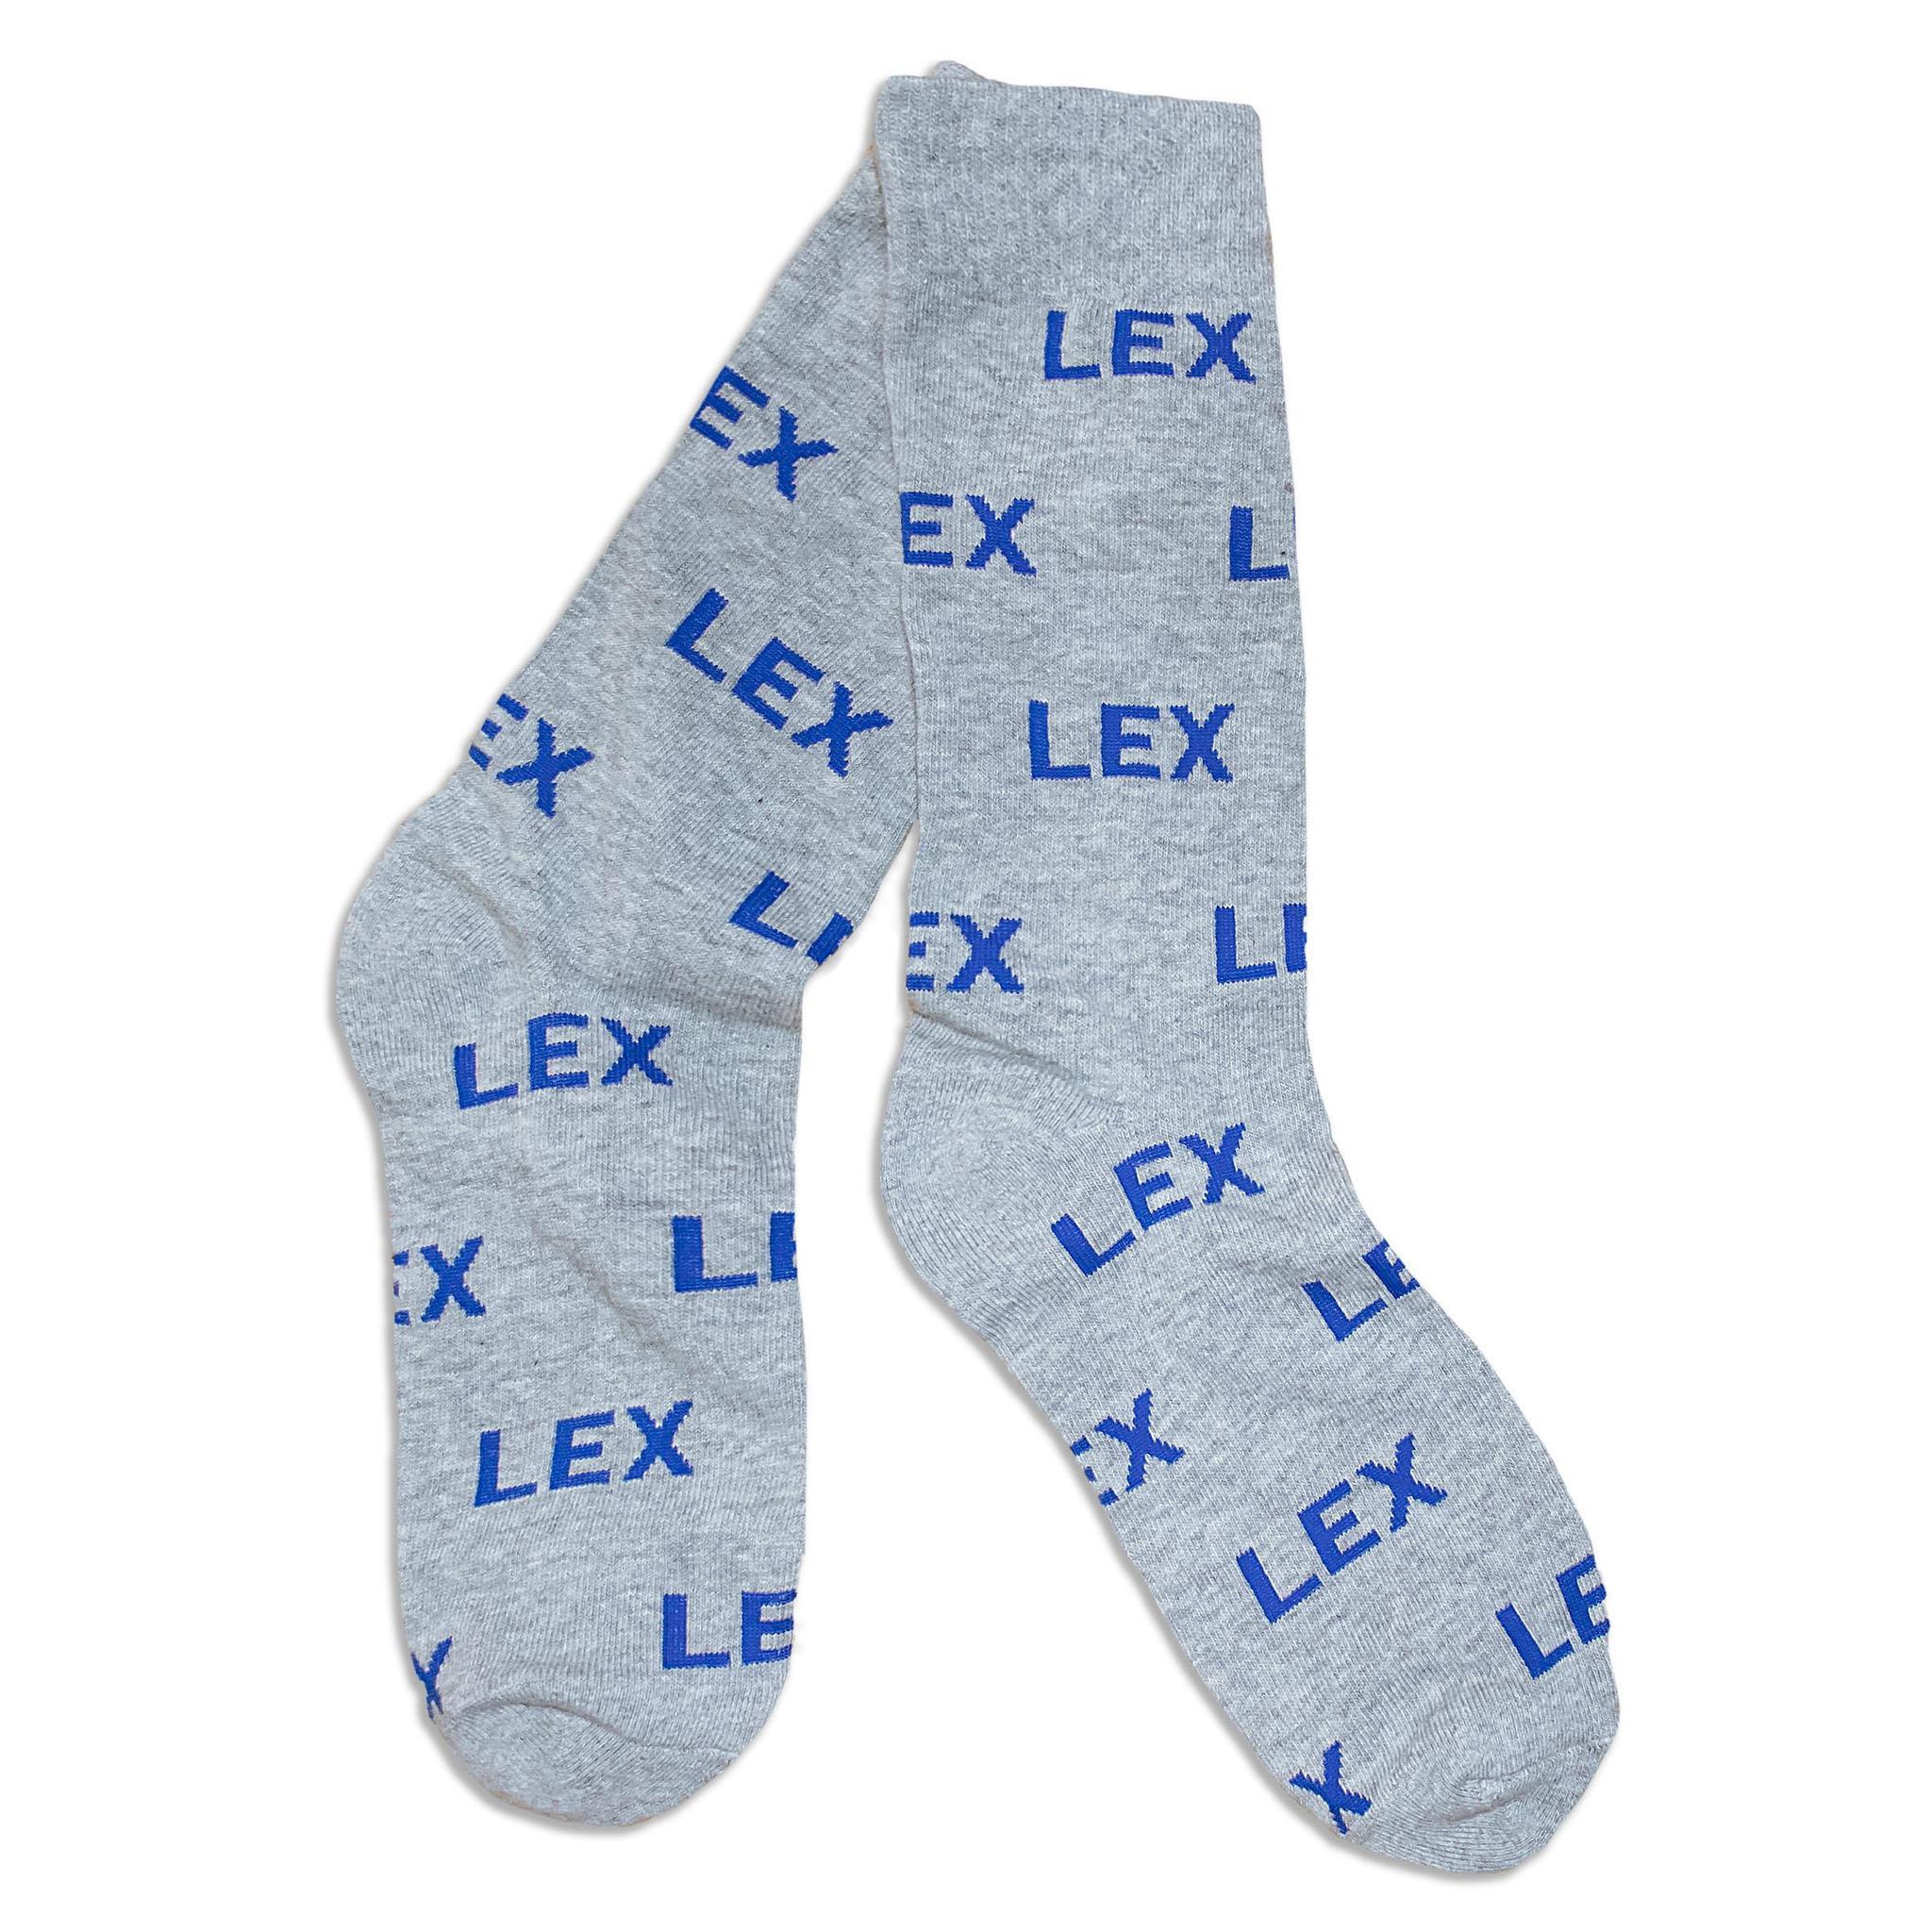 LEX Socks (Grey and Royal)-socks-Southern Socks